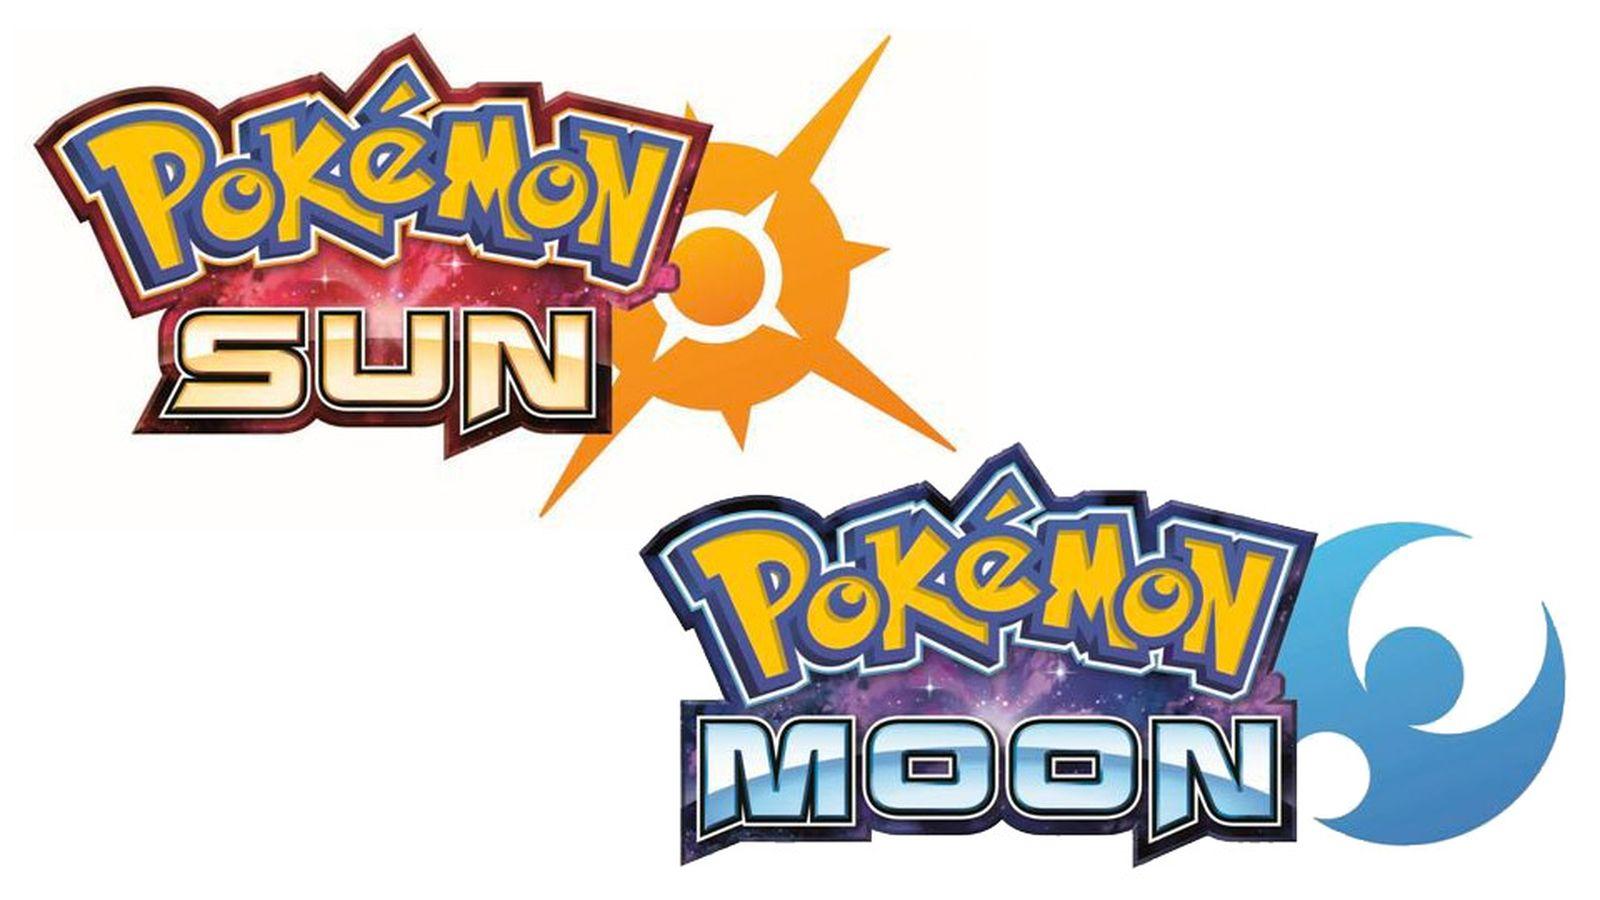 Pokemon Sun And Moon: All Pokemon Encounters Route Guide